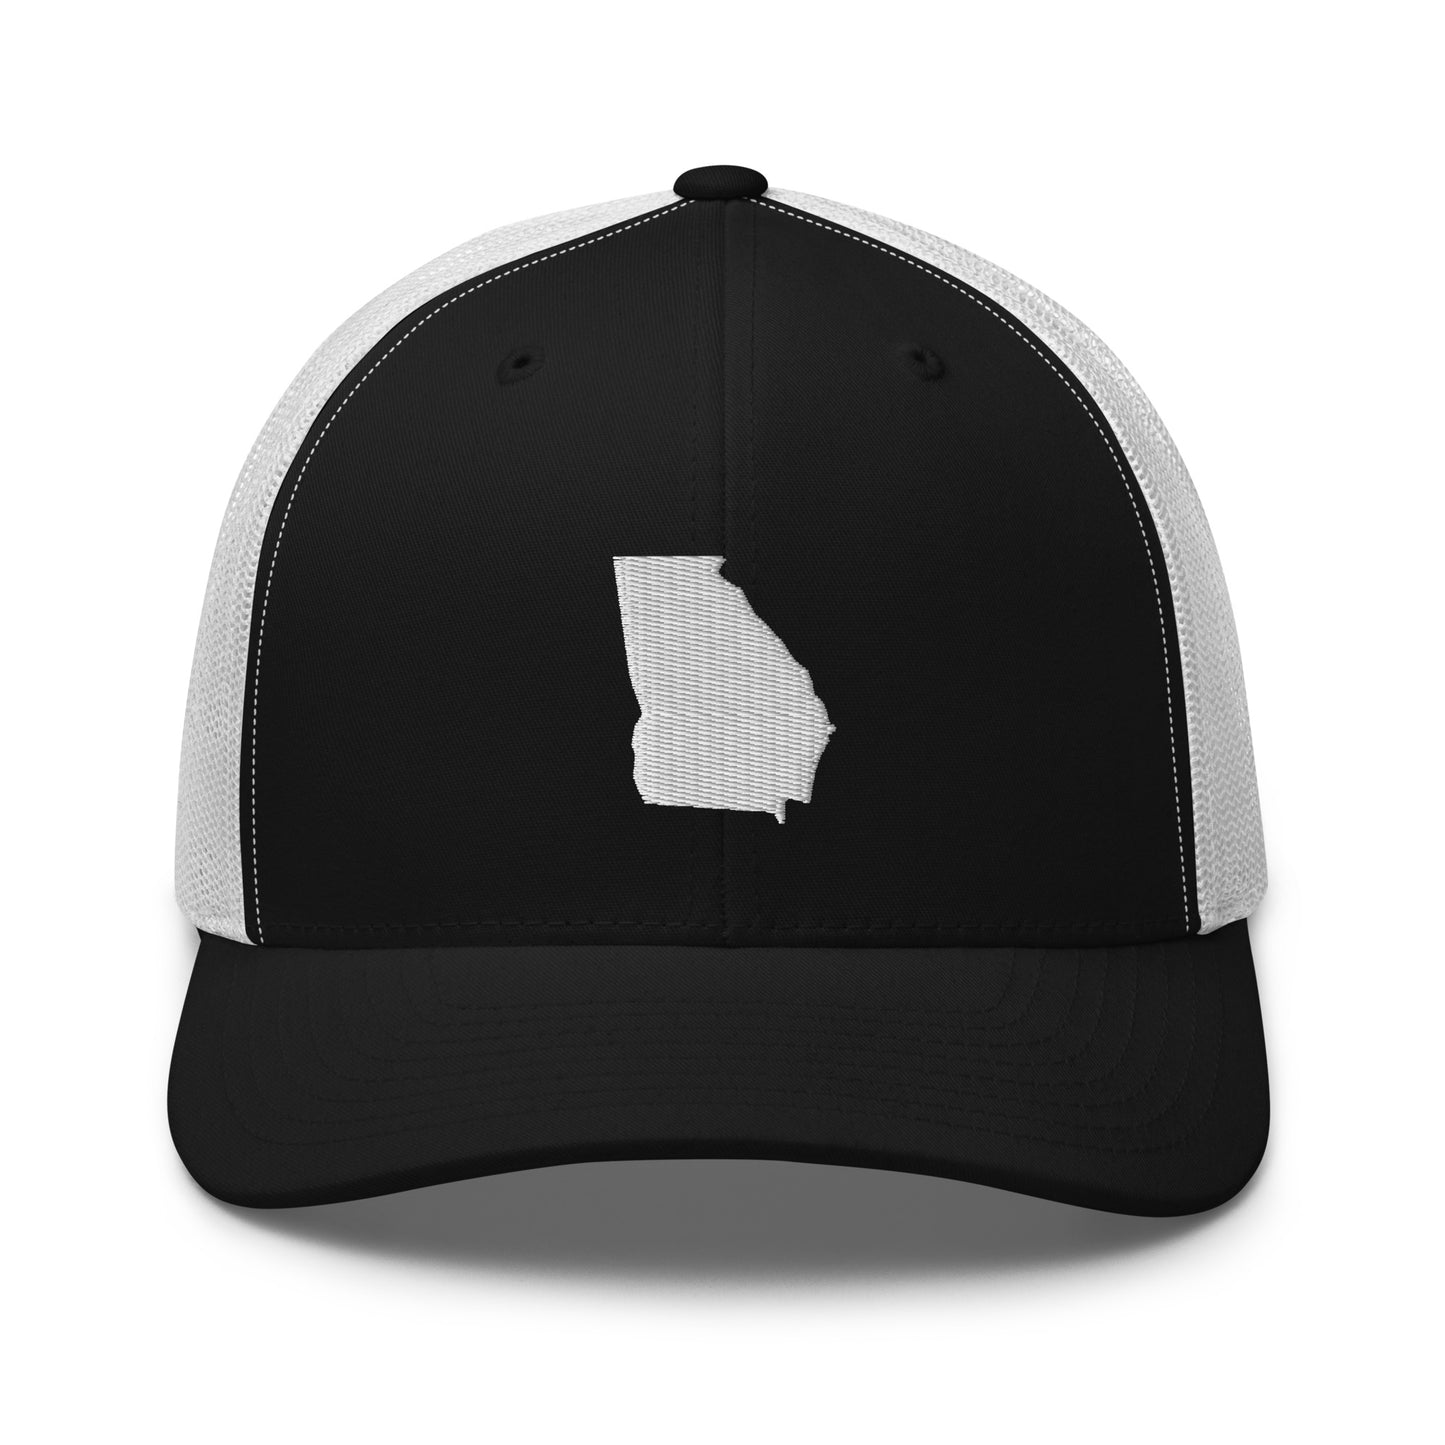 Georgia State Silhouette Mid 6 Panel Snapback Trucker Hat